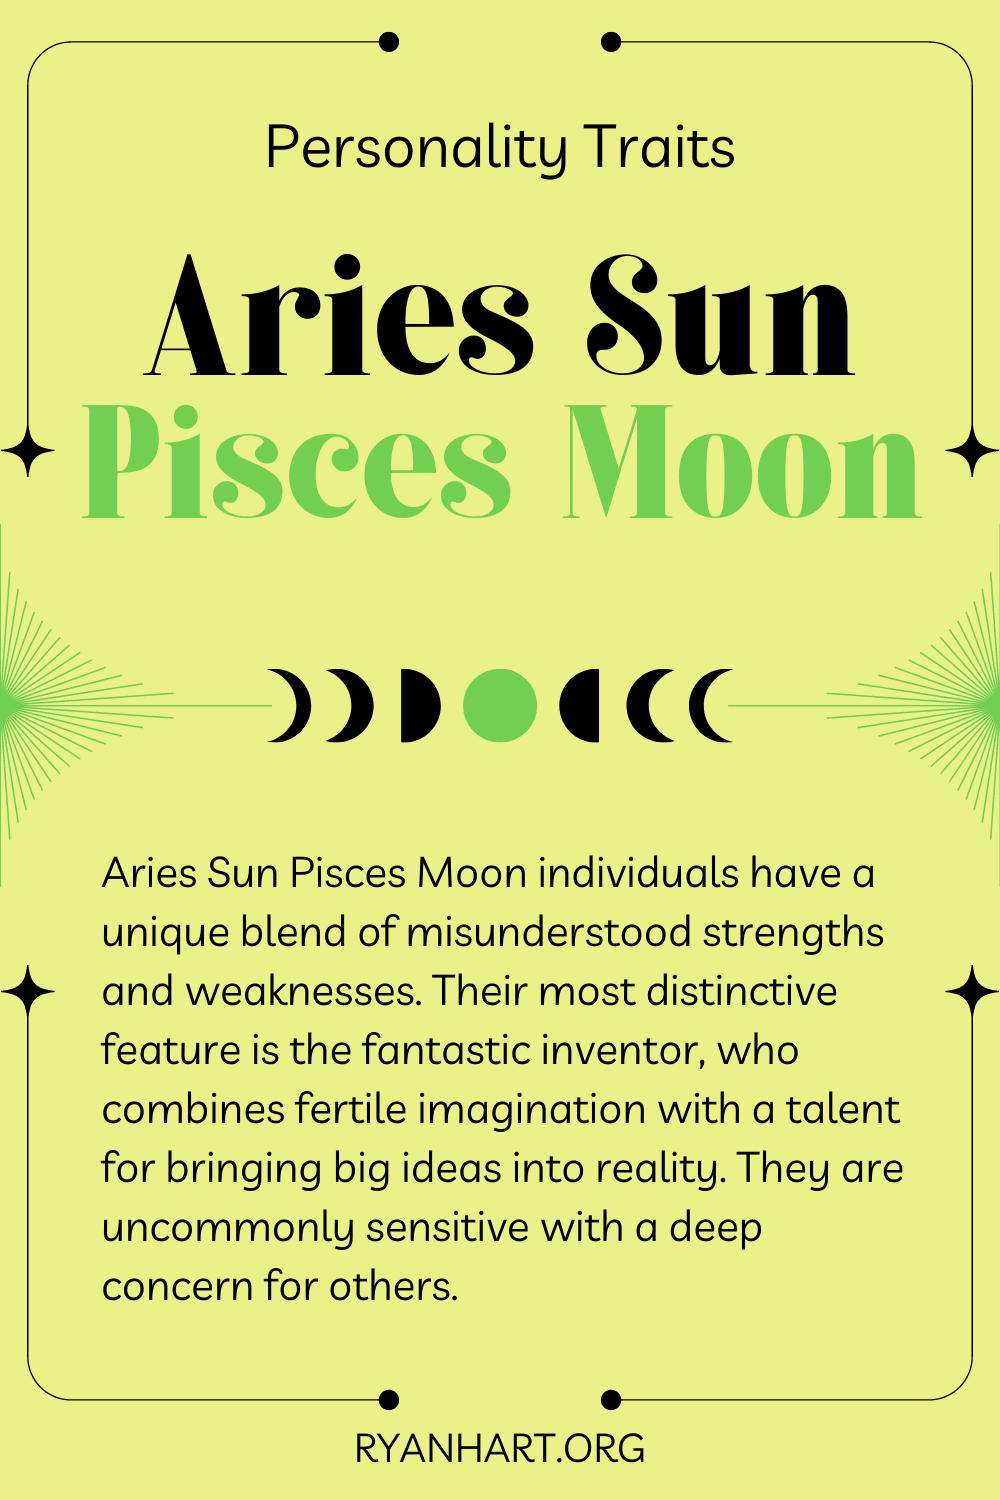  Ciri-ciri Kepribadian Aries Matahari Pisces Bulan